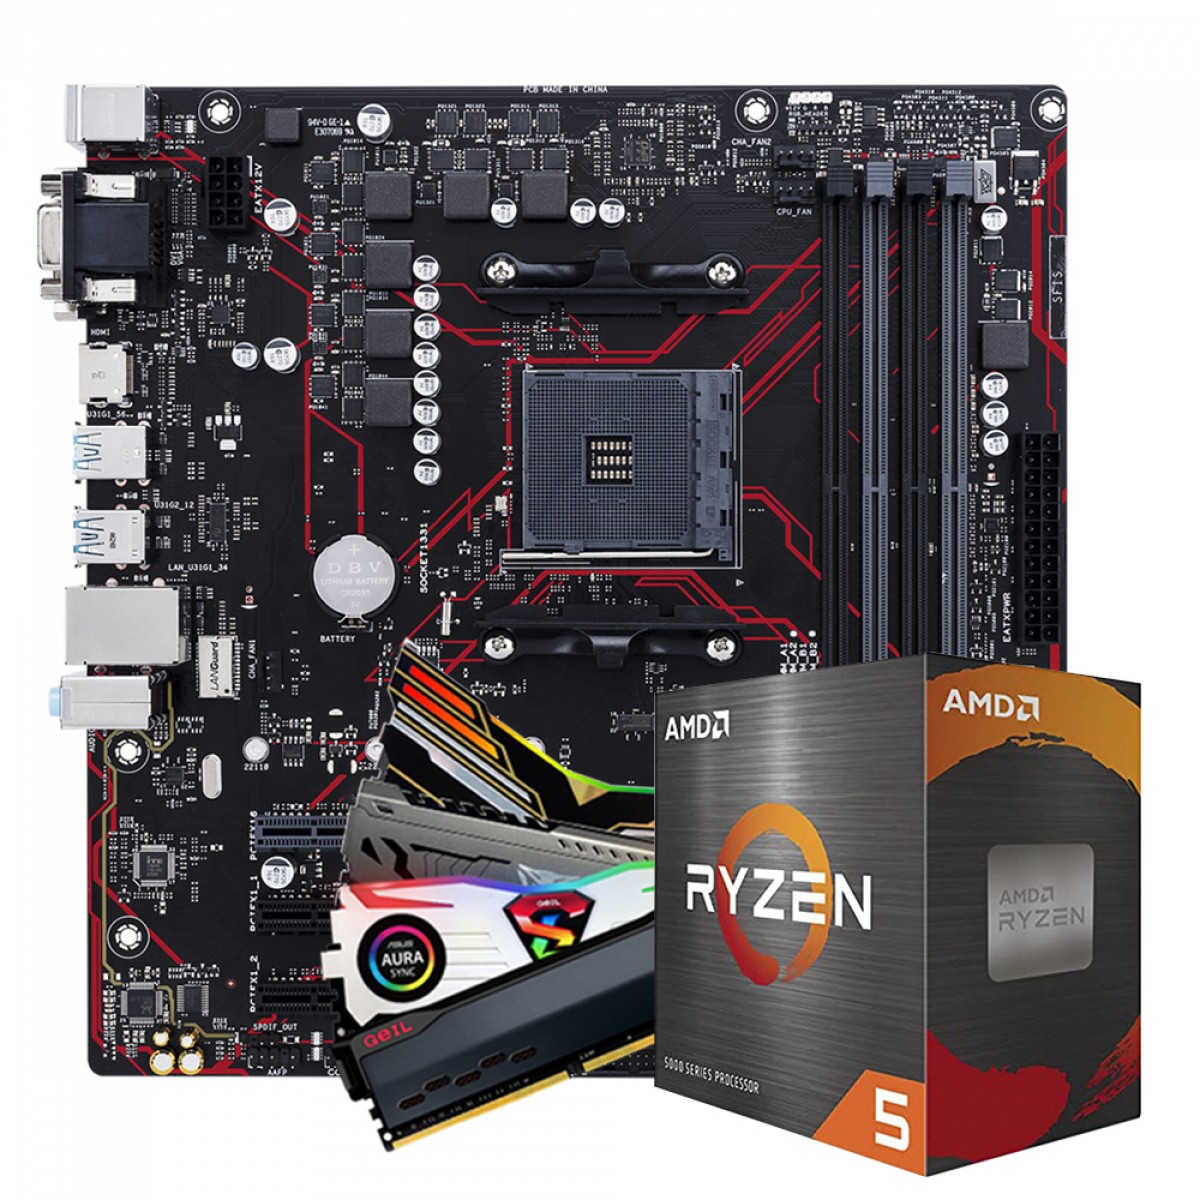 Kit Upgrade, AMD Ryzen 5 3600 + Placa Mãe B550 + 8GB DDR4